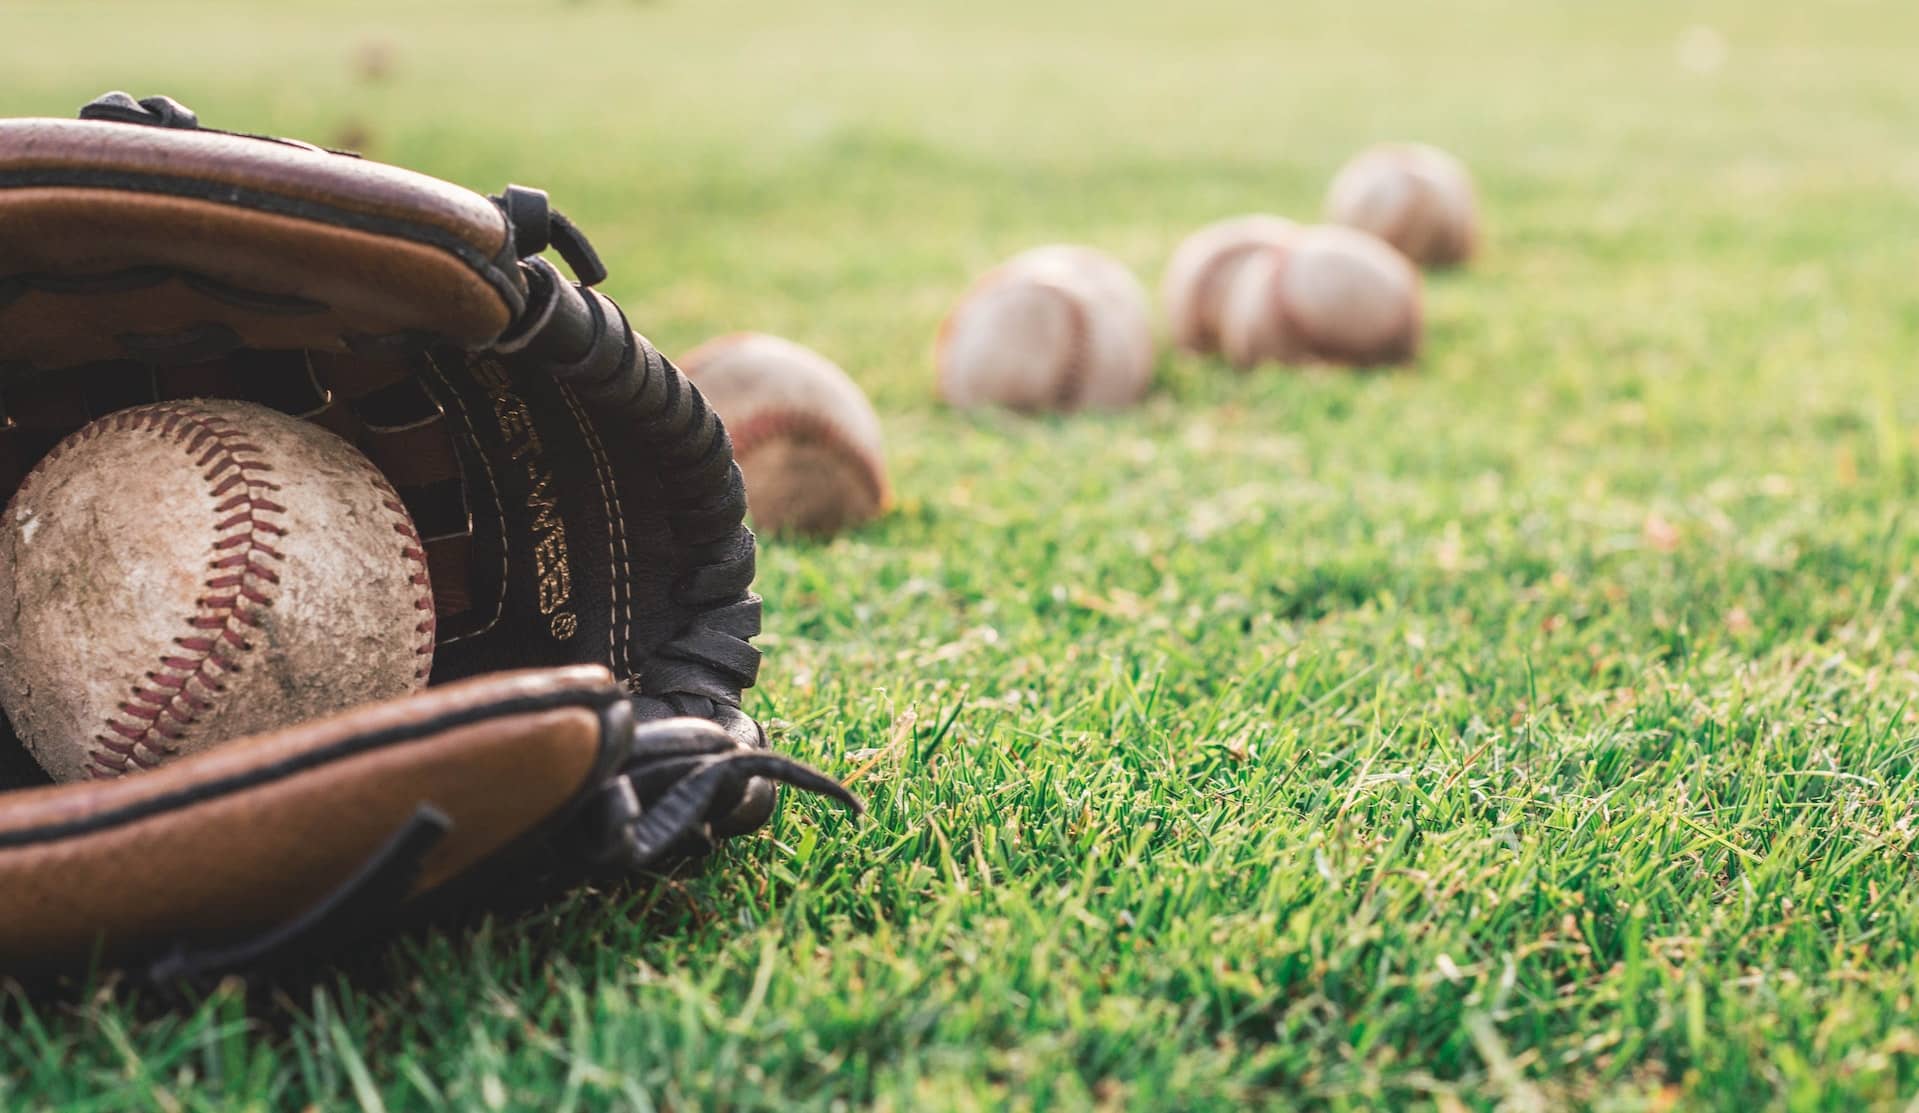 Skinny on Sports baseball story featured image. Glove and baseballs on ground